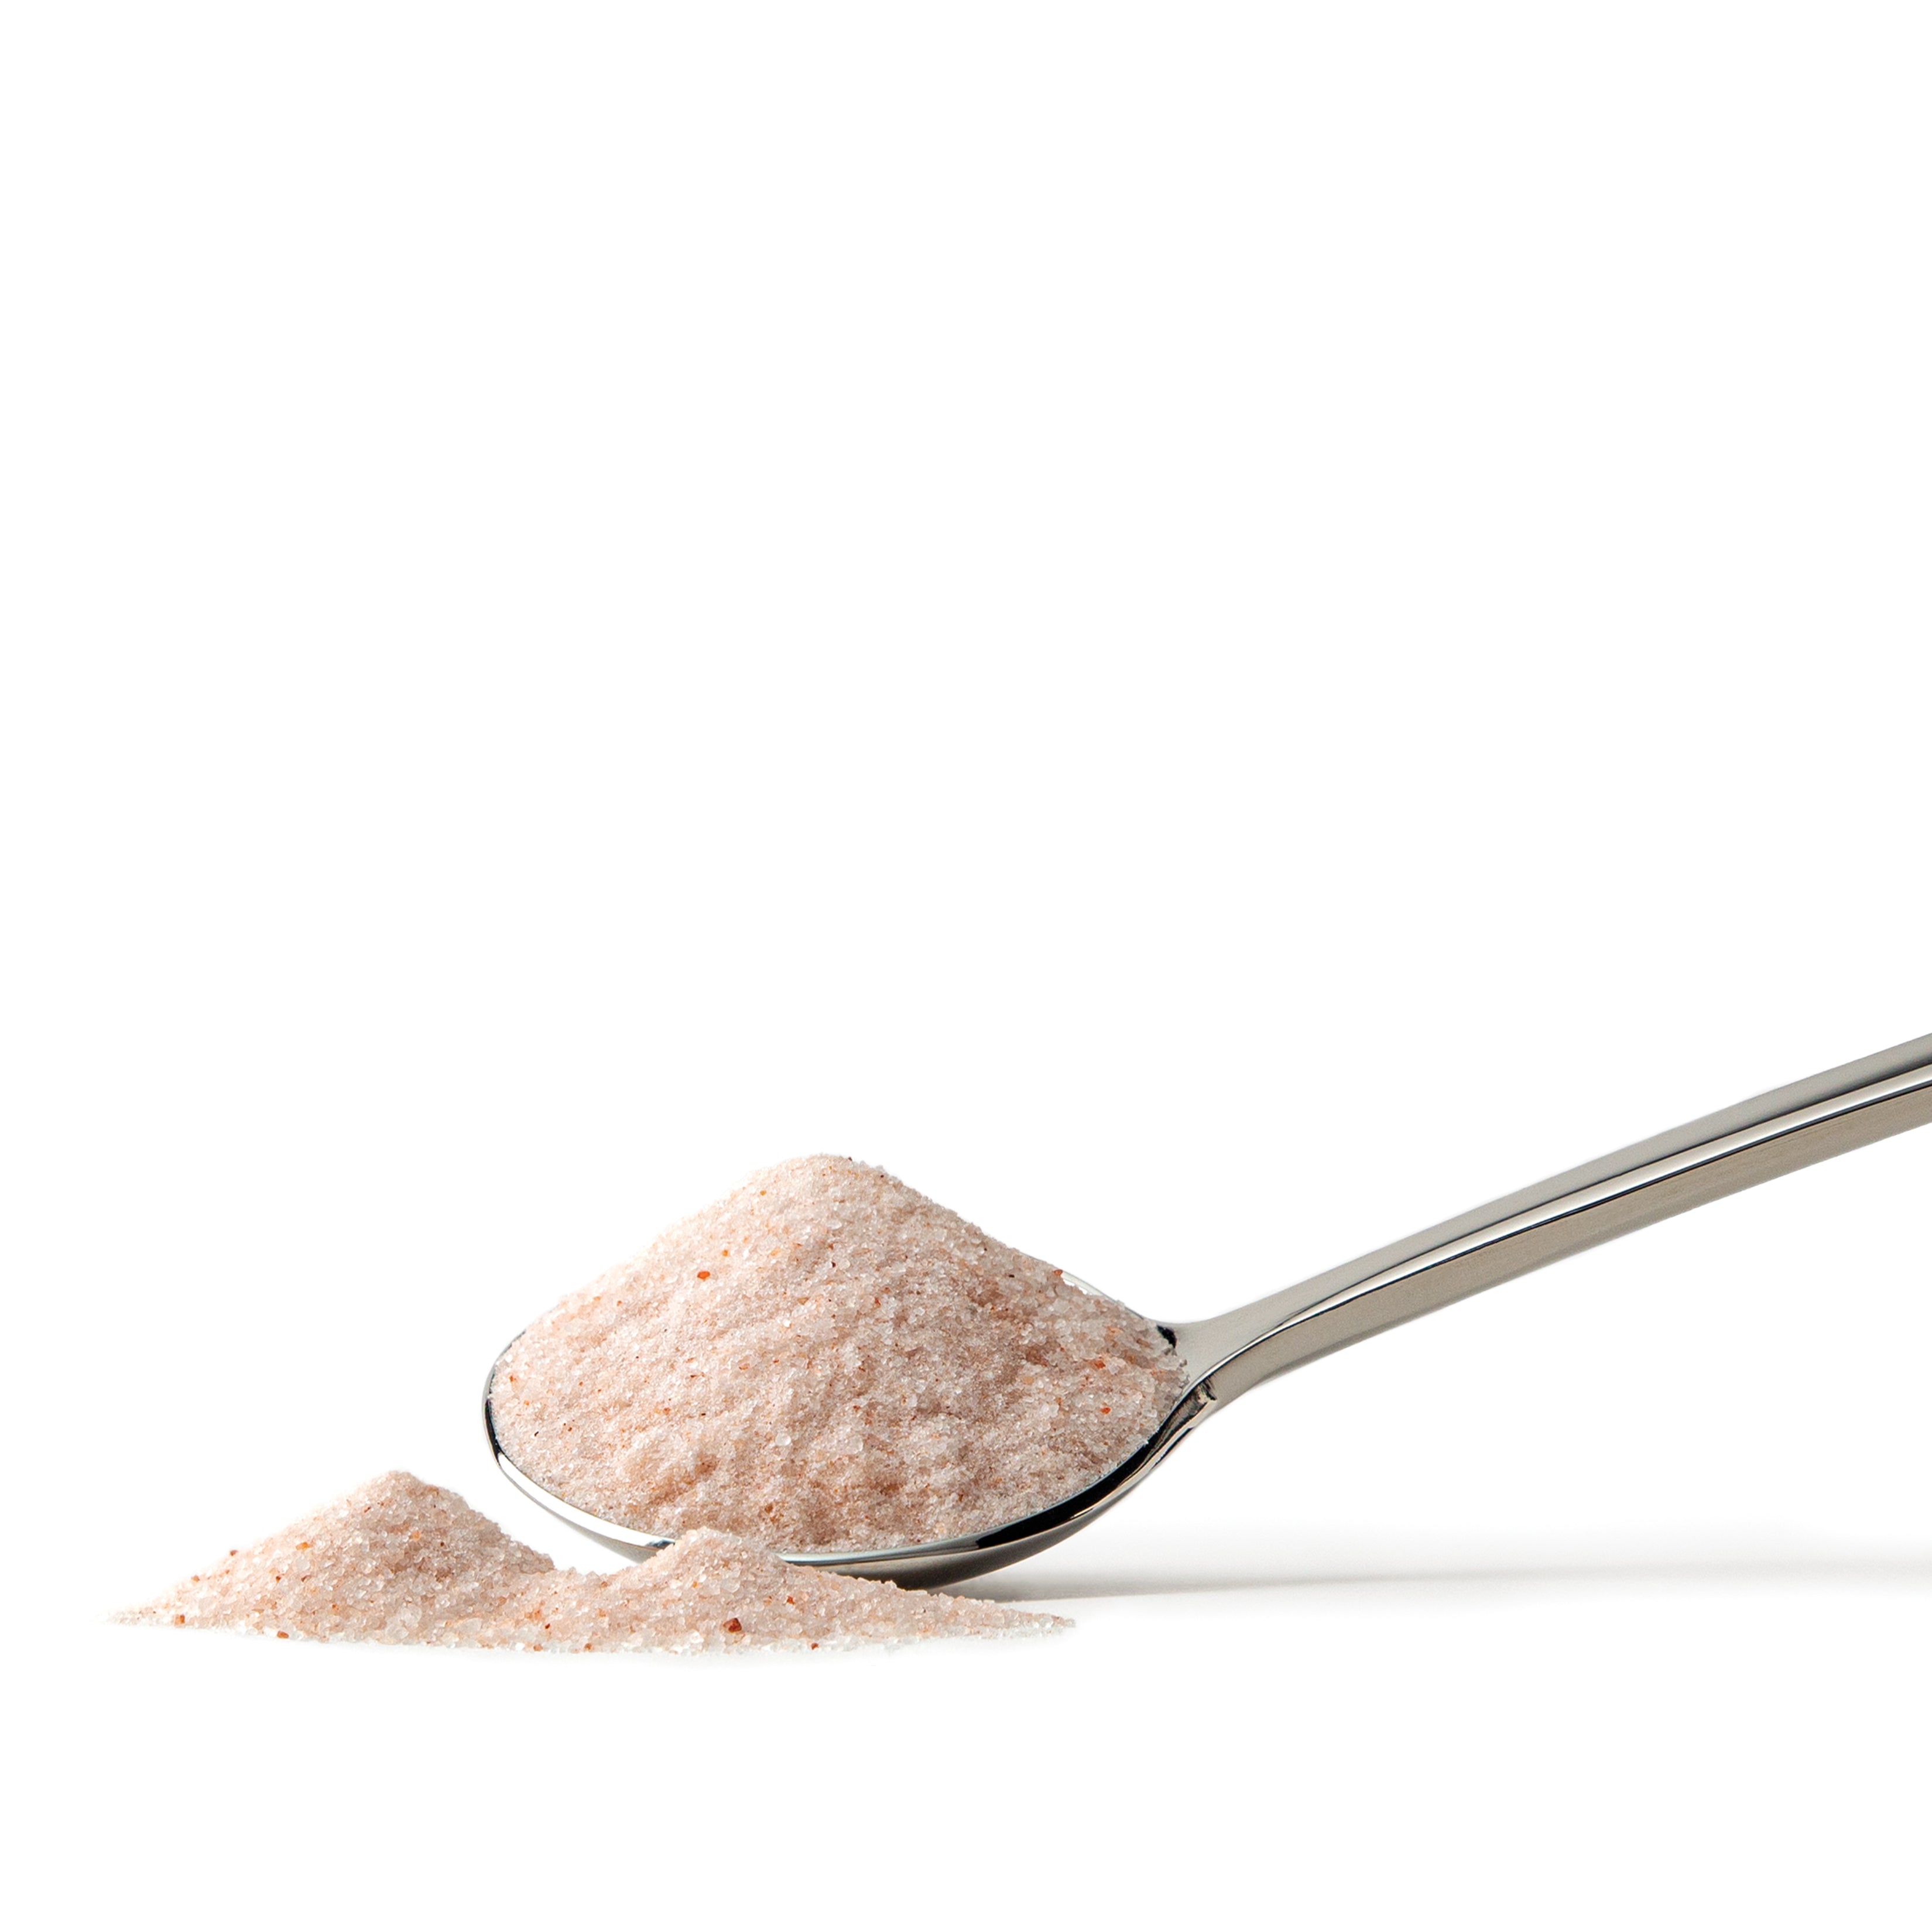 Salt For Life Salt Substitute - 10.5 oz. - Tasty Low Sodium Salt &  Potassium Salt Substitute for High Blood Pressure - The Top Salt Substitute  With Real Salt-Taste and Salt Alternative! 